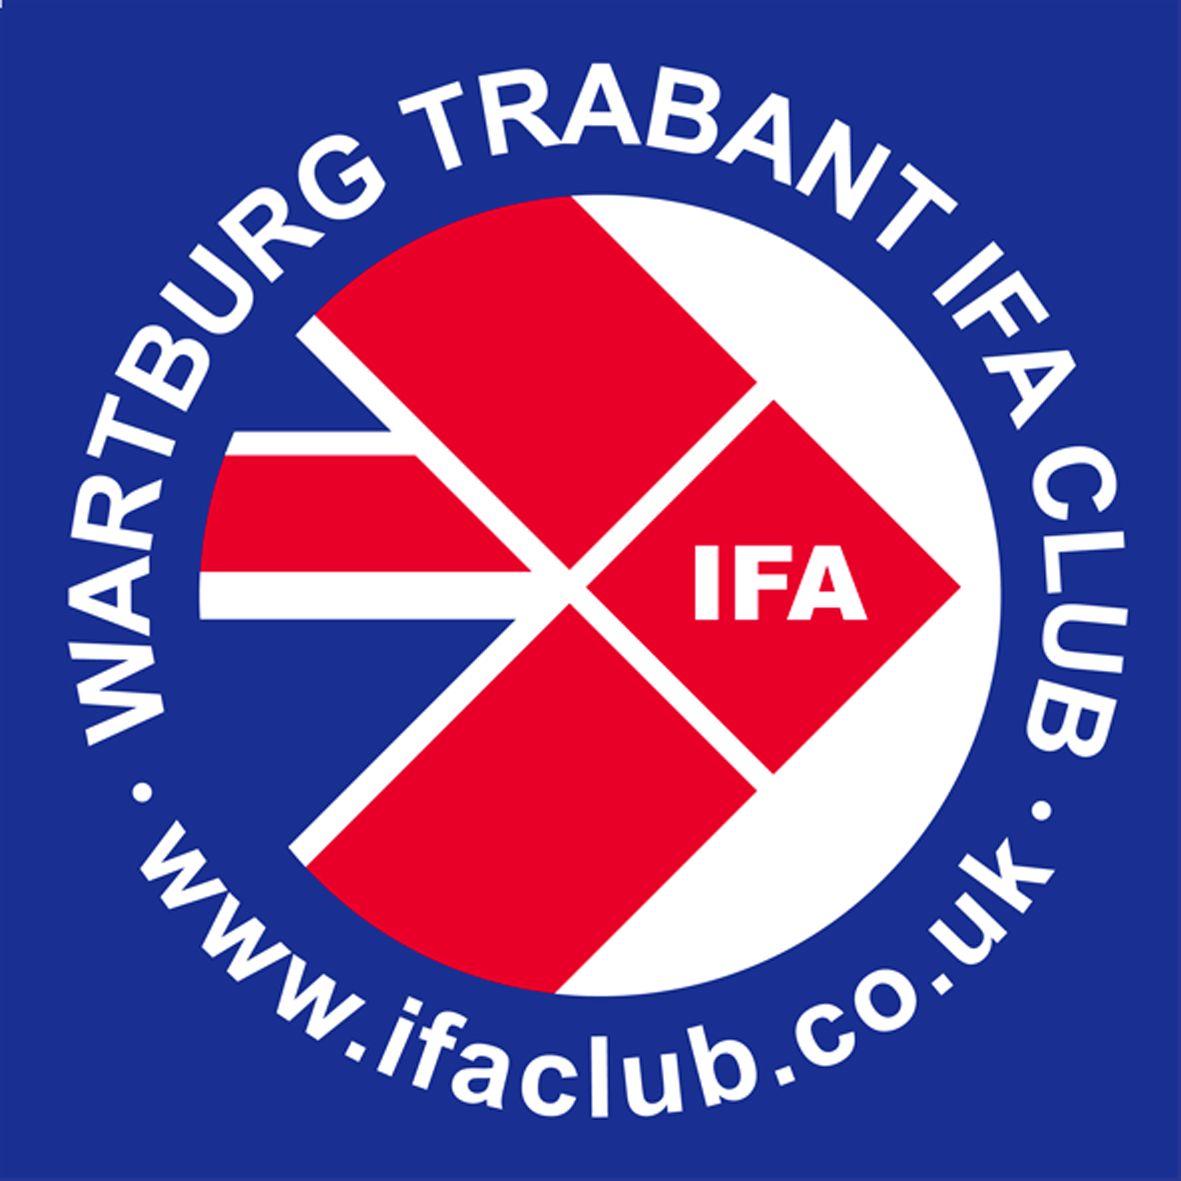 Wartburg Trabant IFA Club